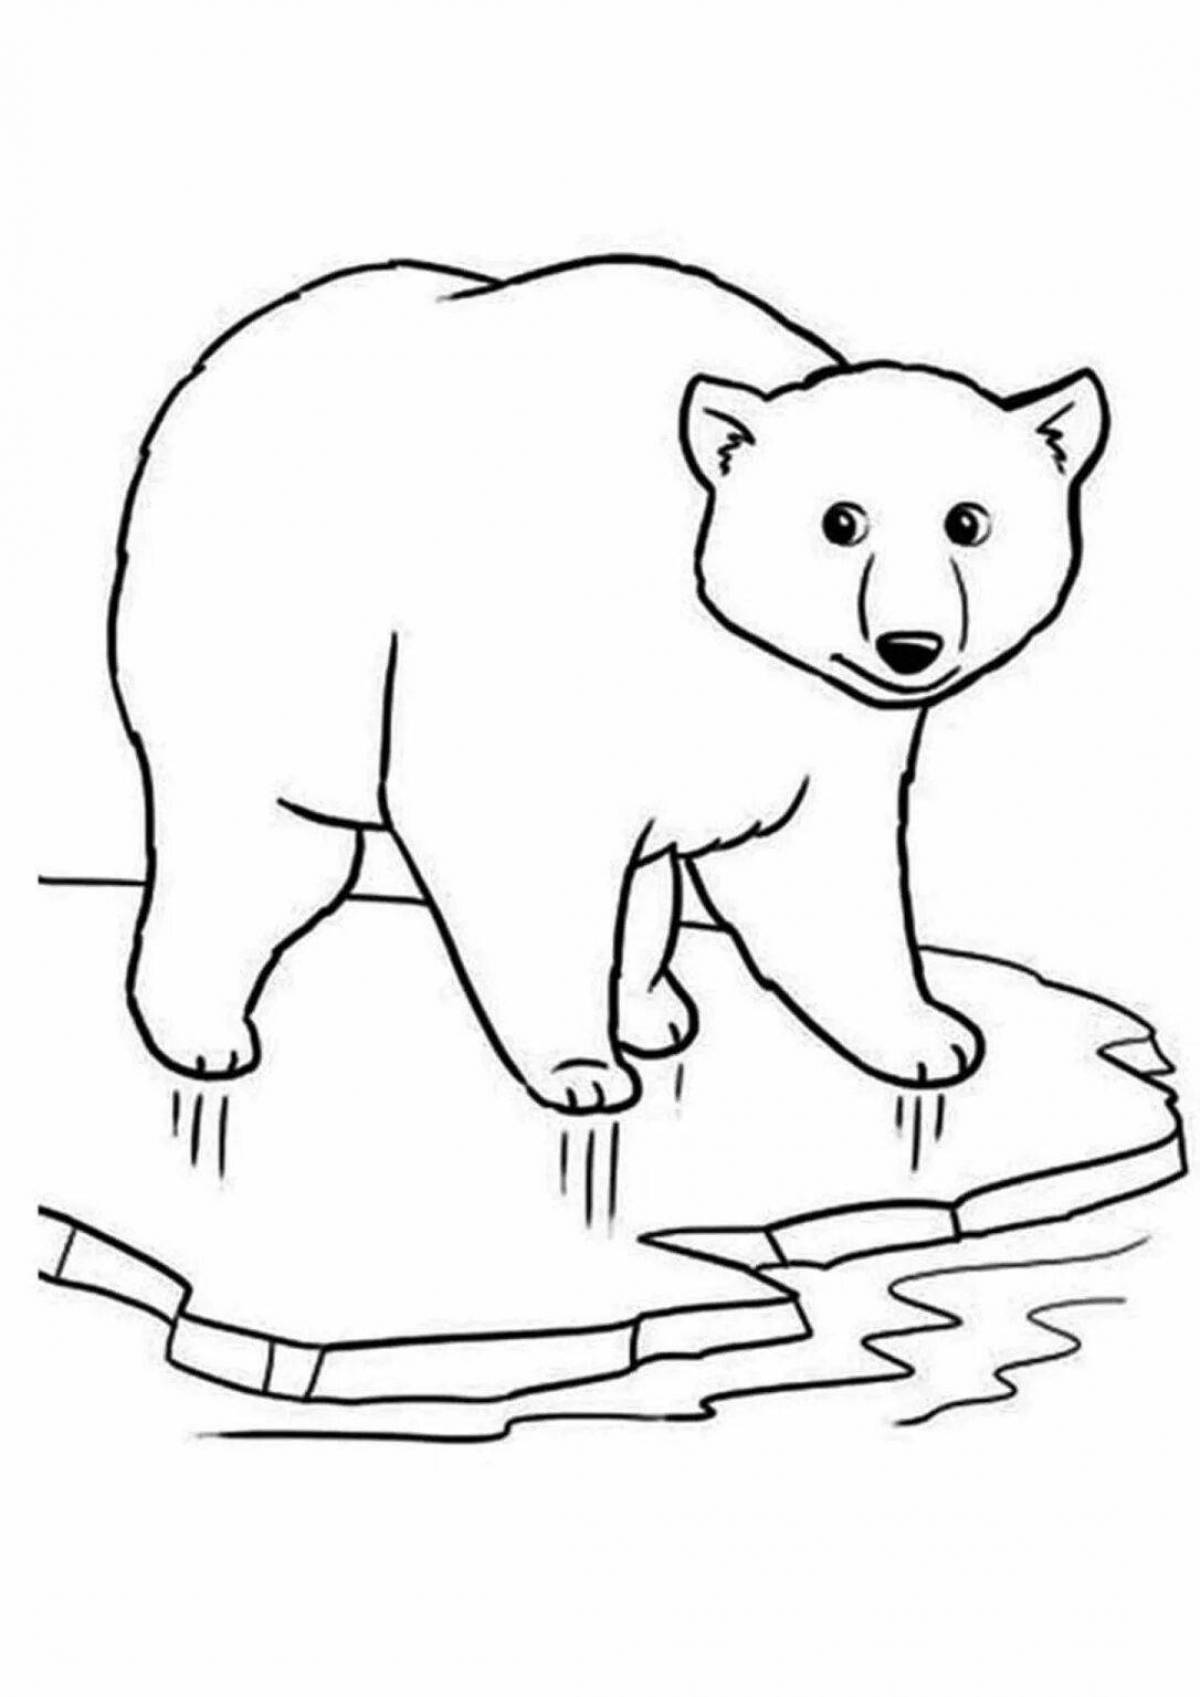 Magic polar bear coloring book for kids